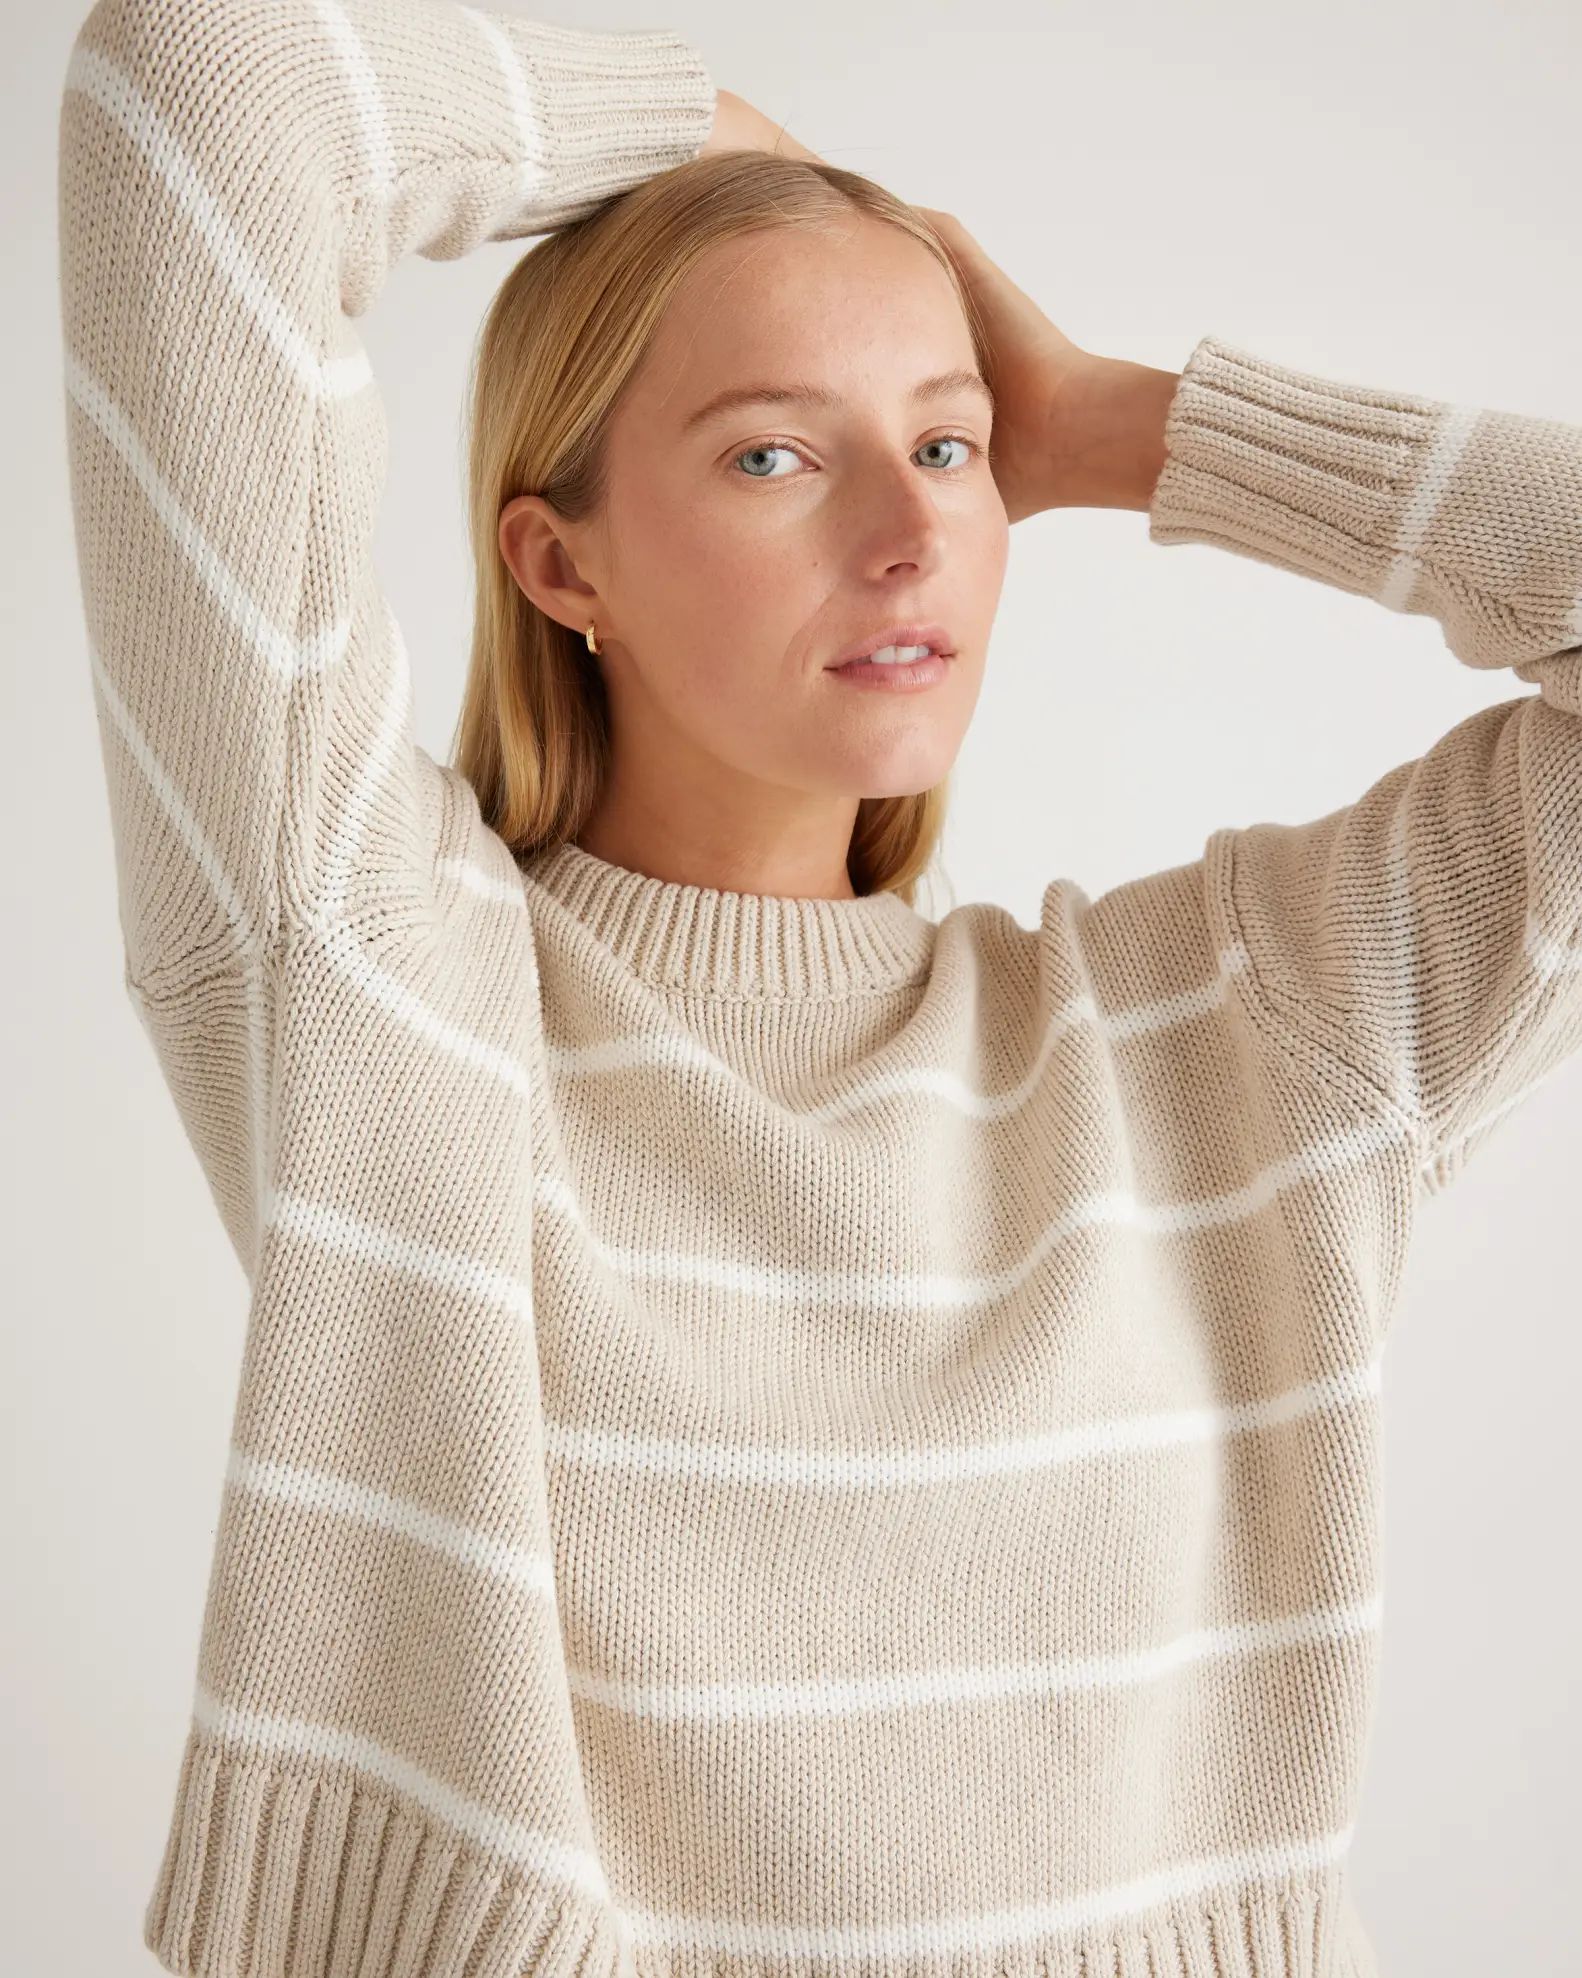 100% Organic Cotton Striped Crew Sweater | Quince